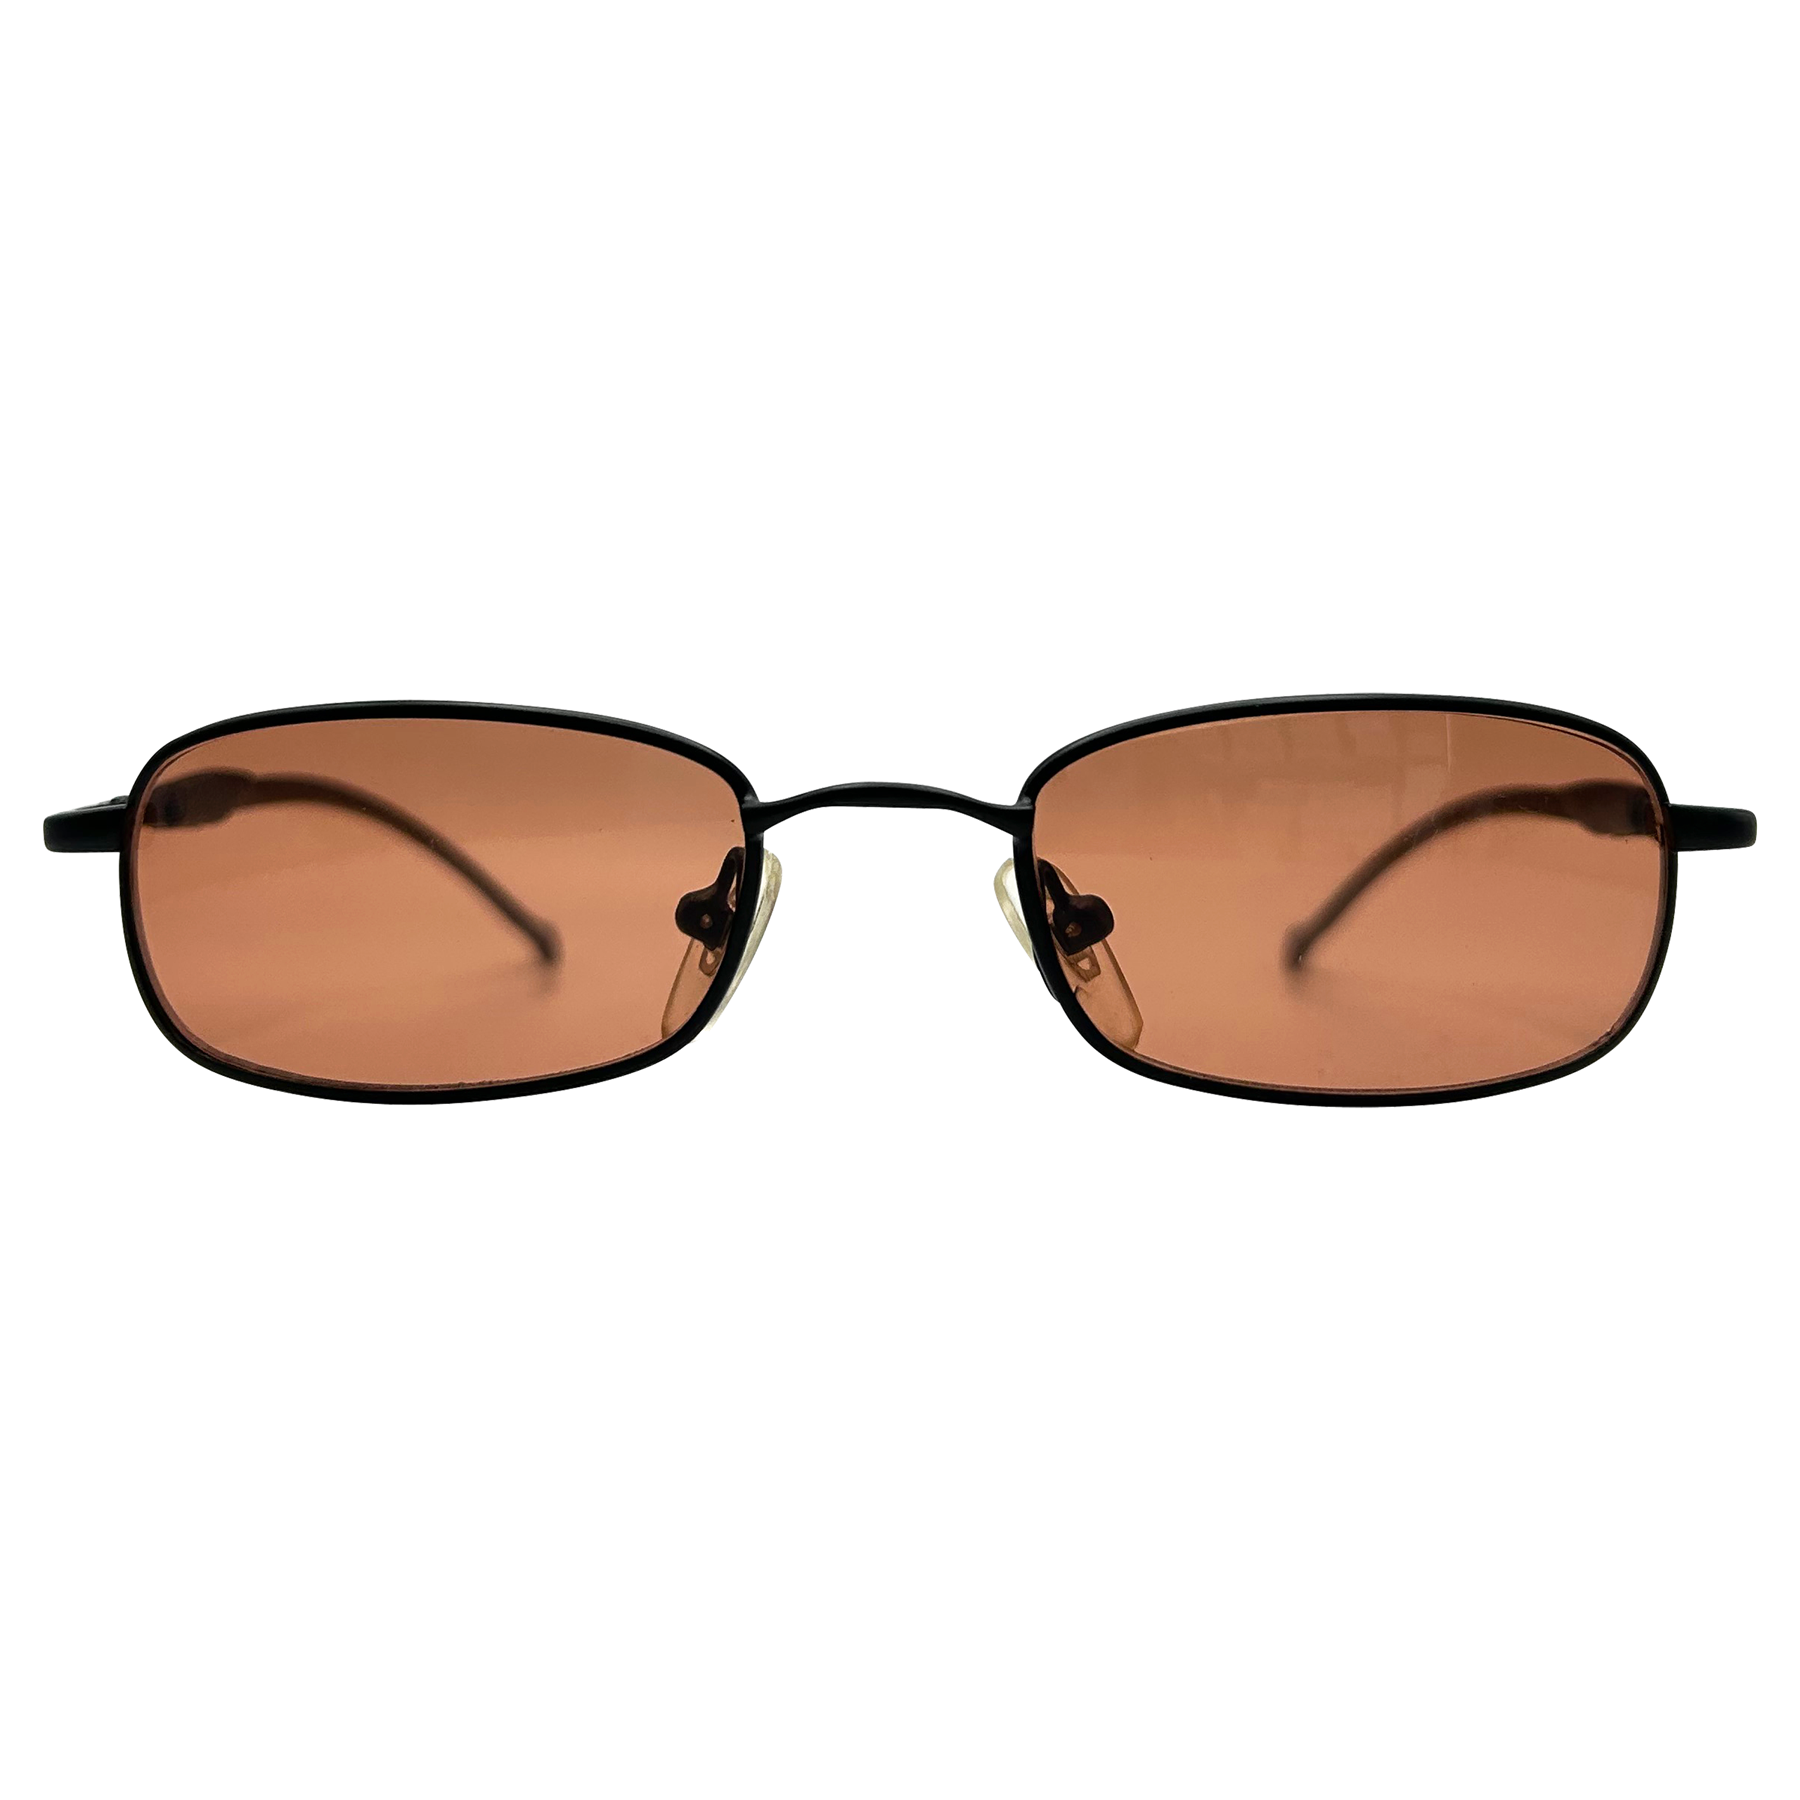 TINZY Tiny Square 90s Sunglasses | Blue-Blocker | Day Driving